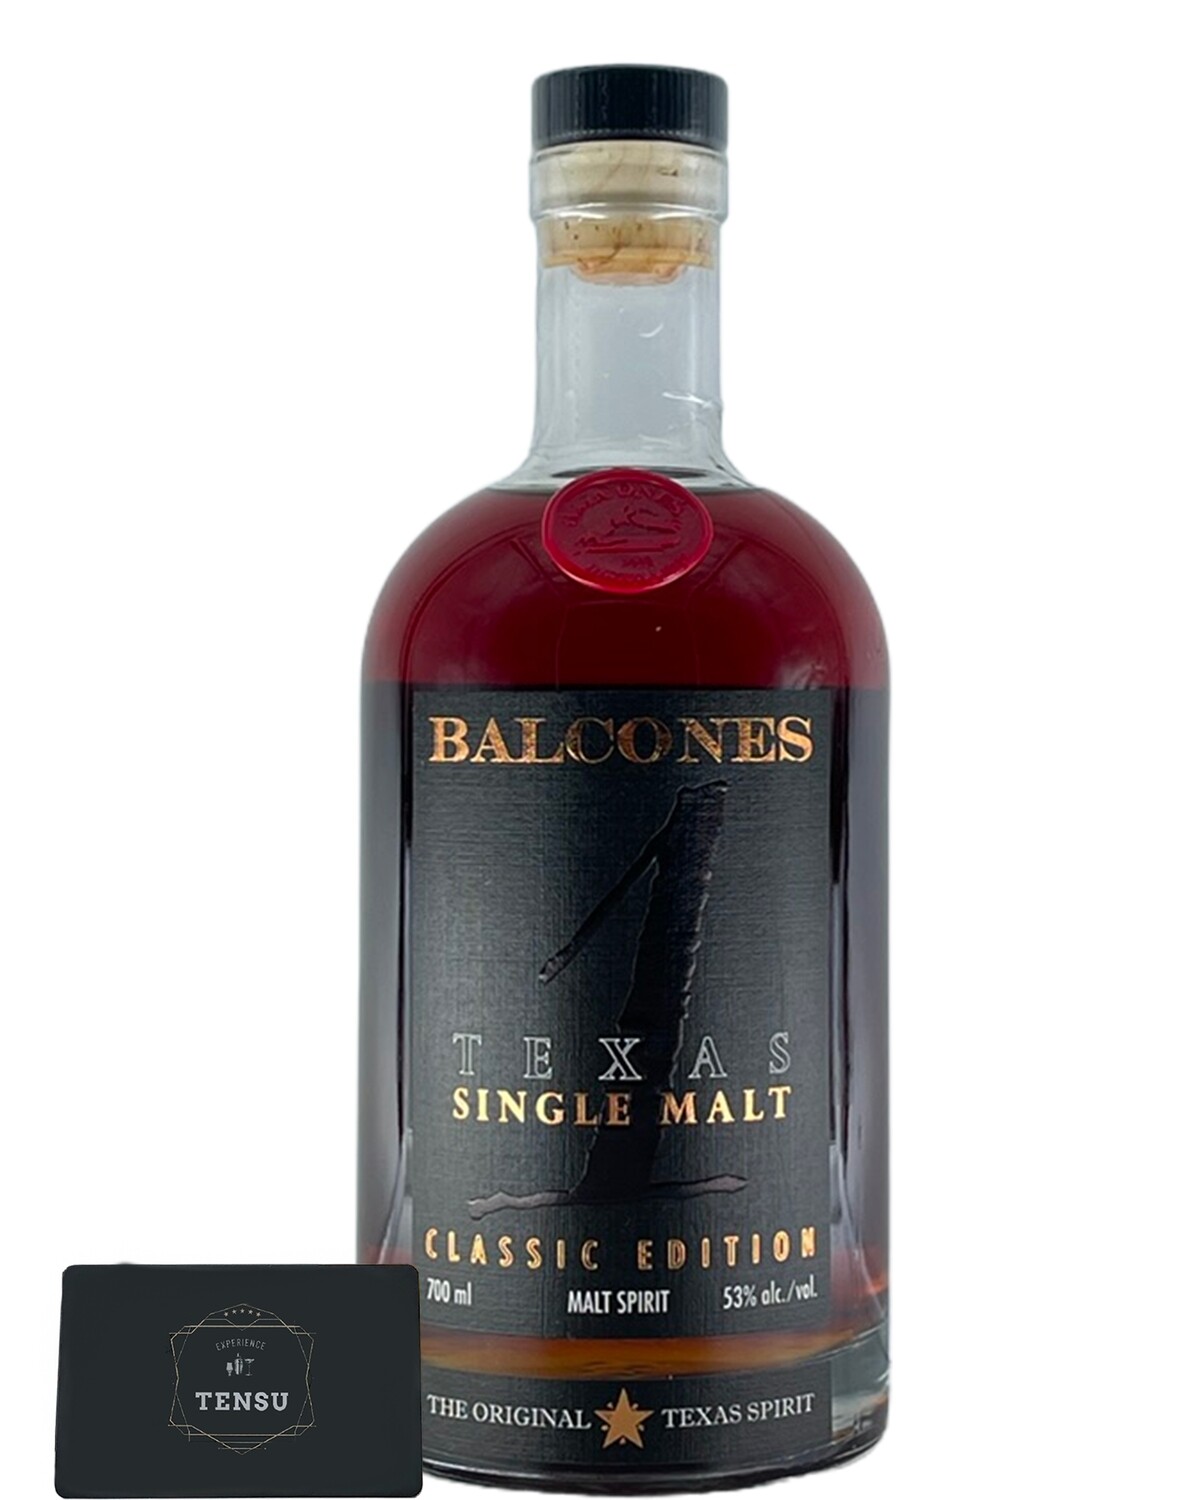 Balcones 1 Texas Single Malt Whisky (08-10-2021) 53,0 "OB"